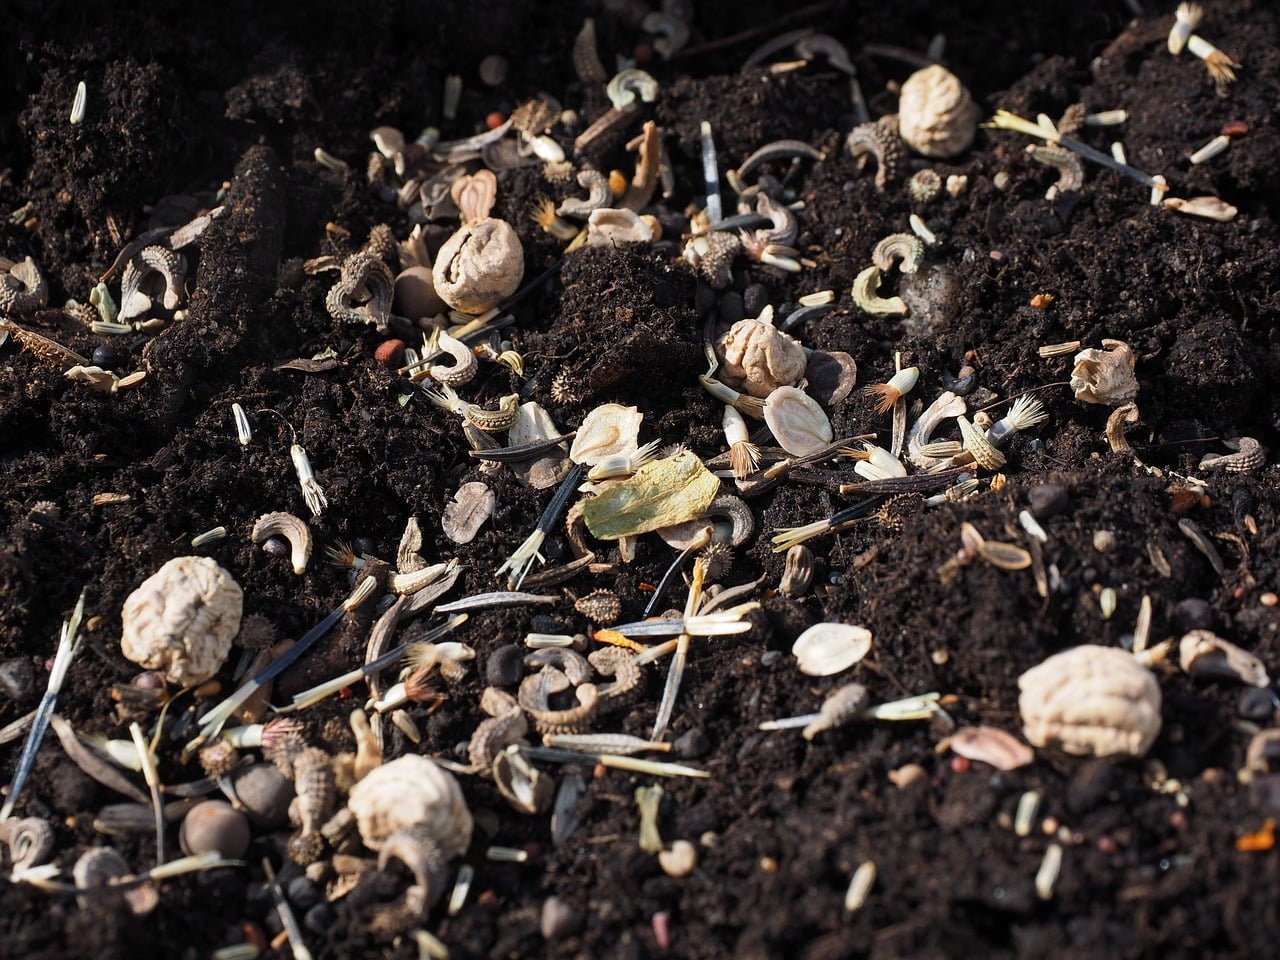 Various seeds, including pumpkin and sunflower, scattered across fertile soil.